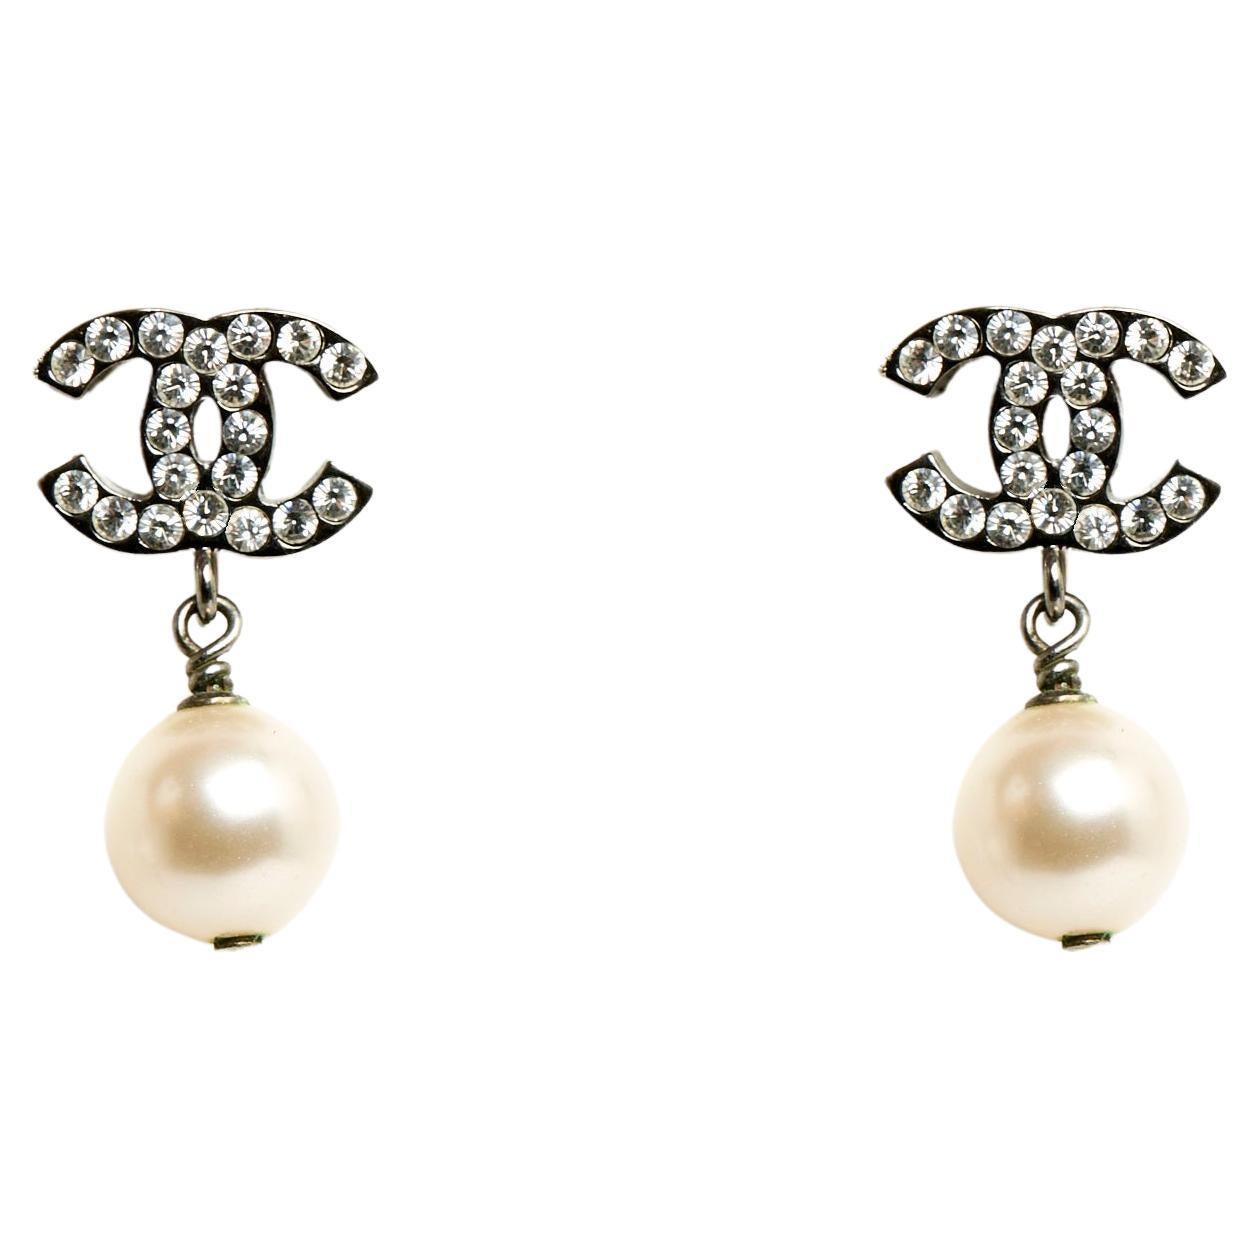 Chanel earrings Studs Black silver medium CC and medium fancy pearl